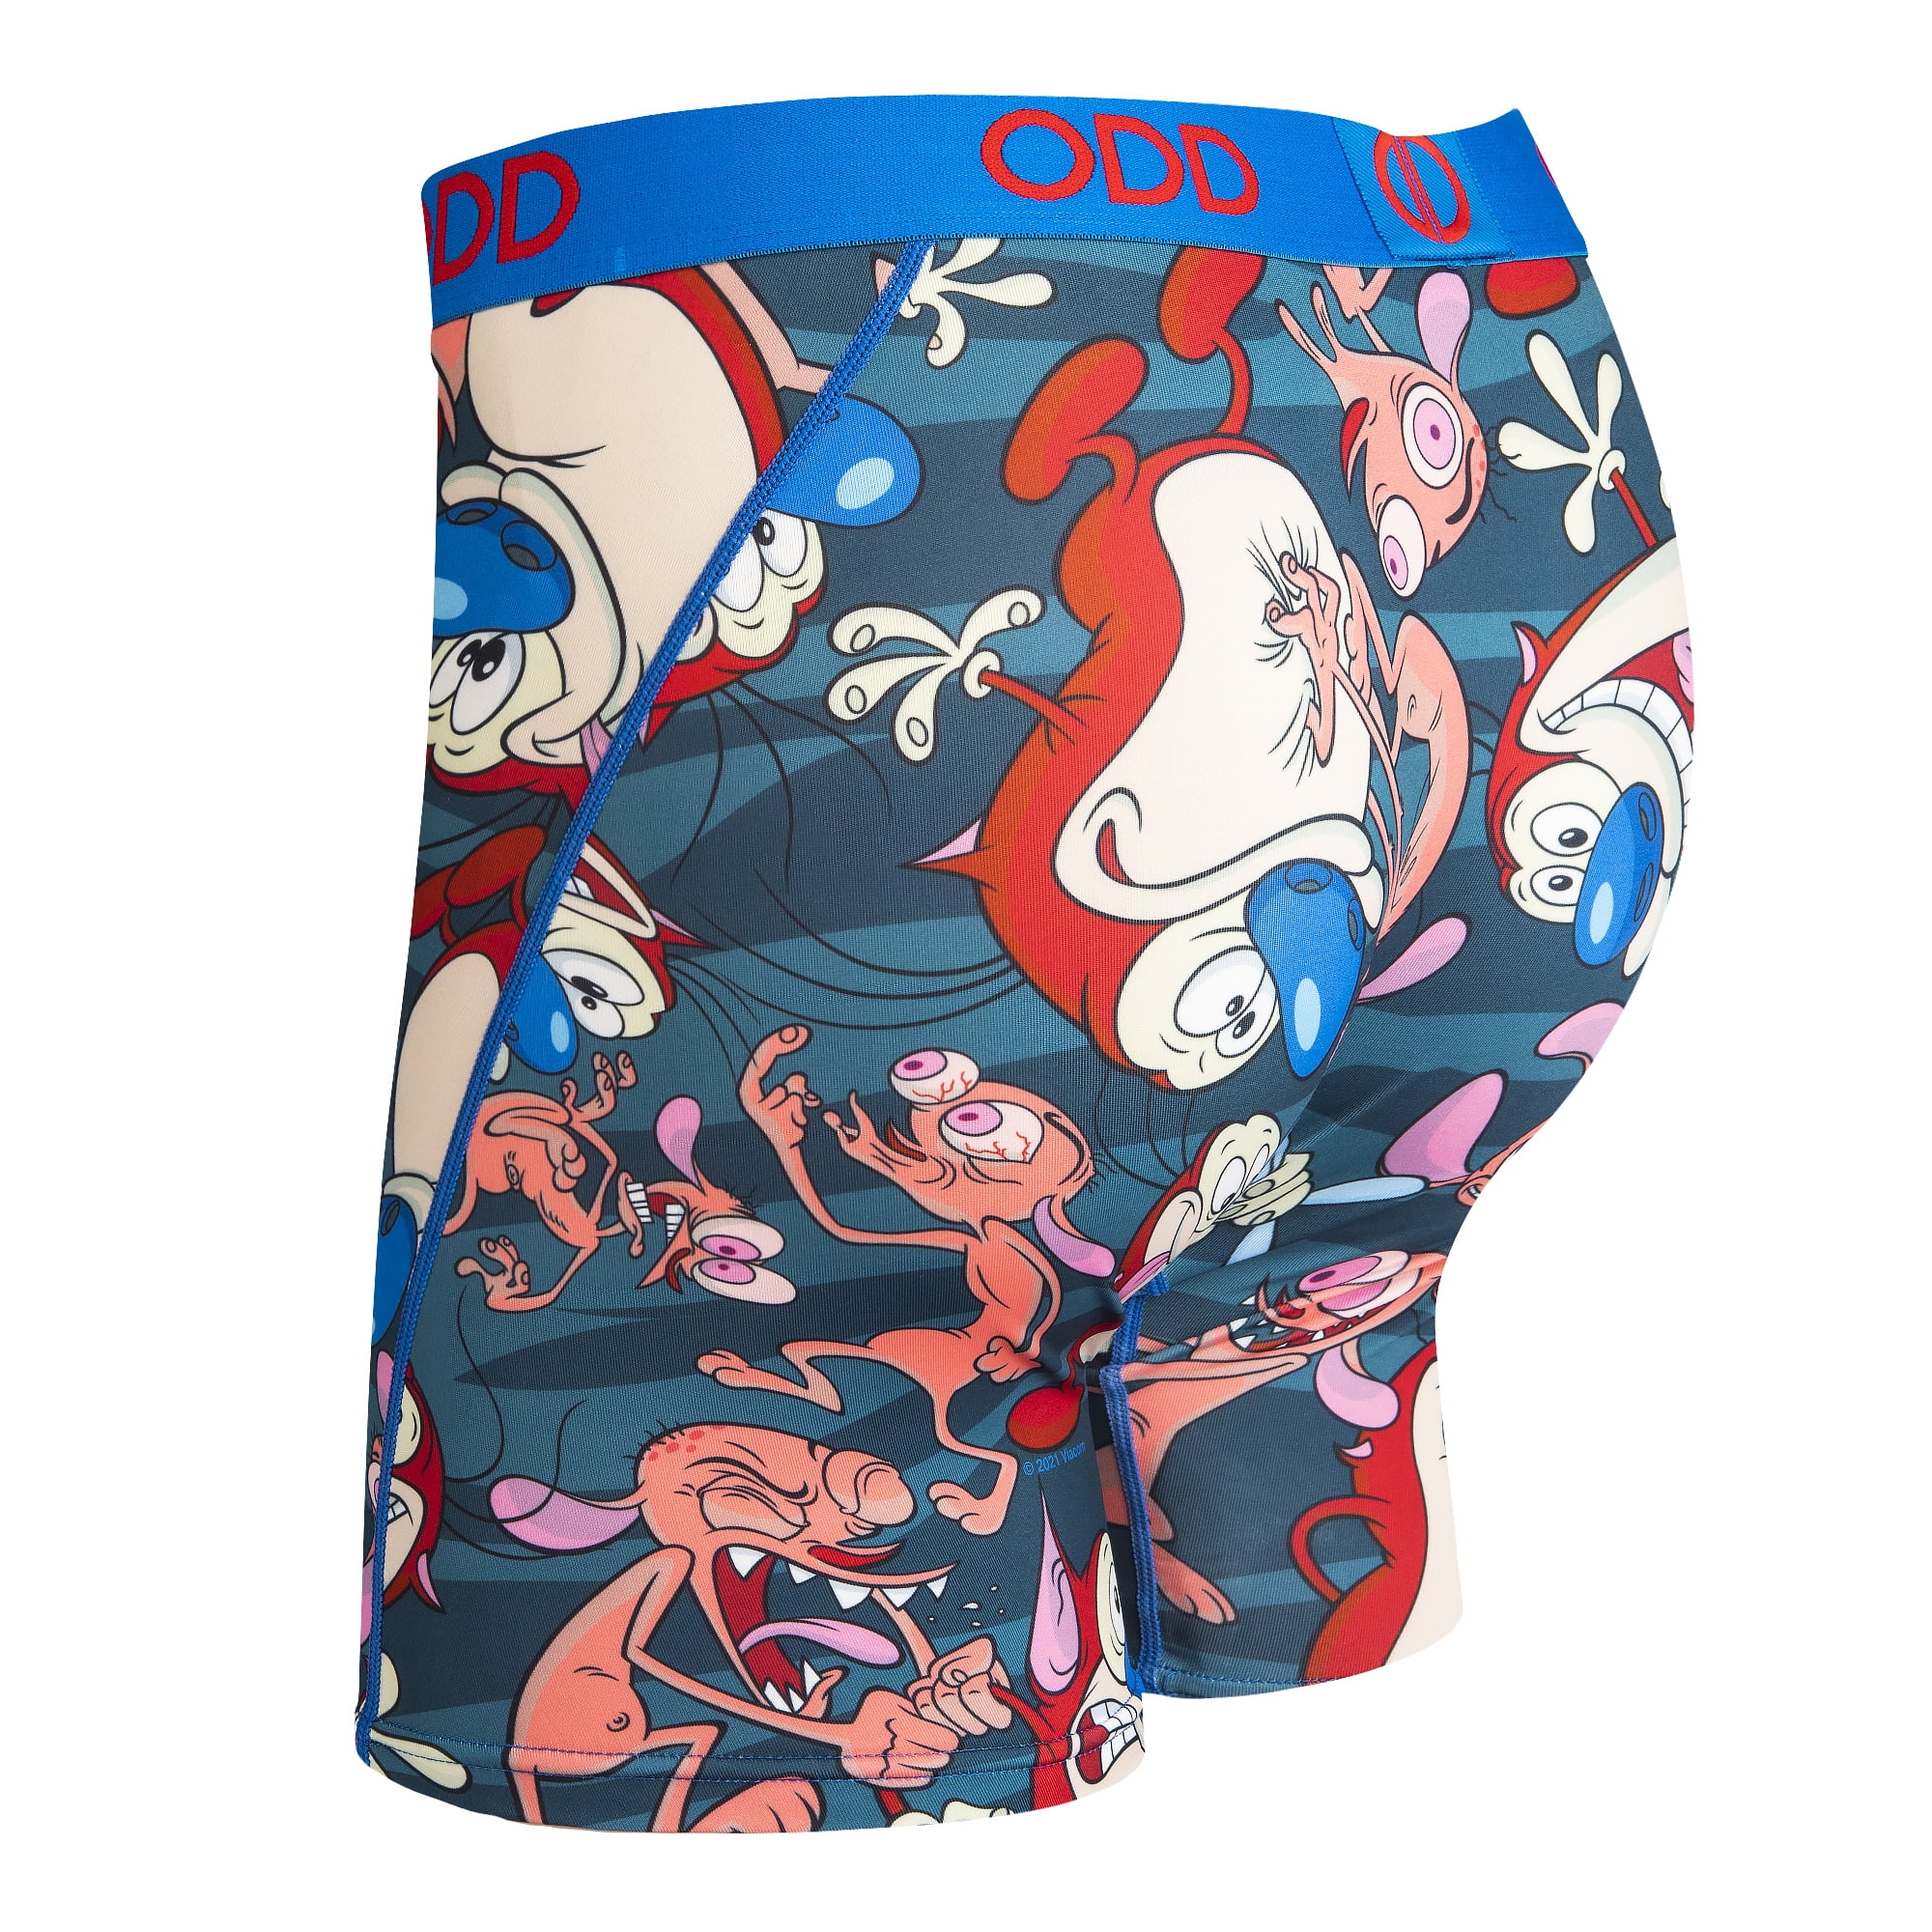 Odd Sox, Funny Men's Boxer Briefs Underwear, Nickelodeon Cartoons